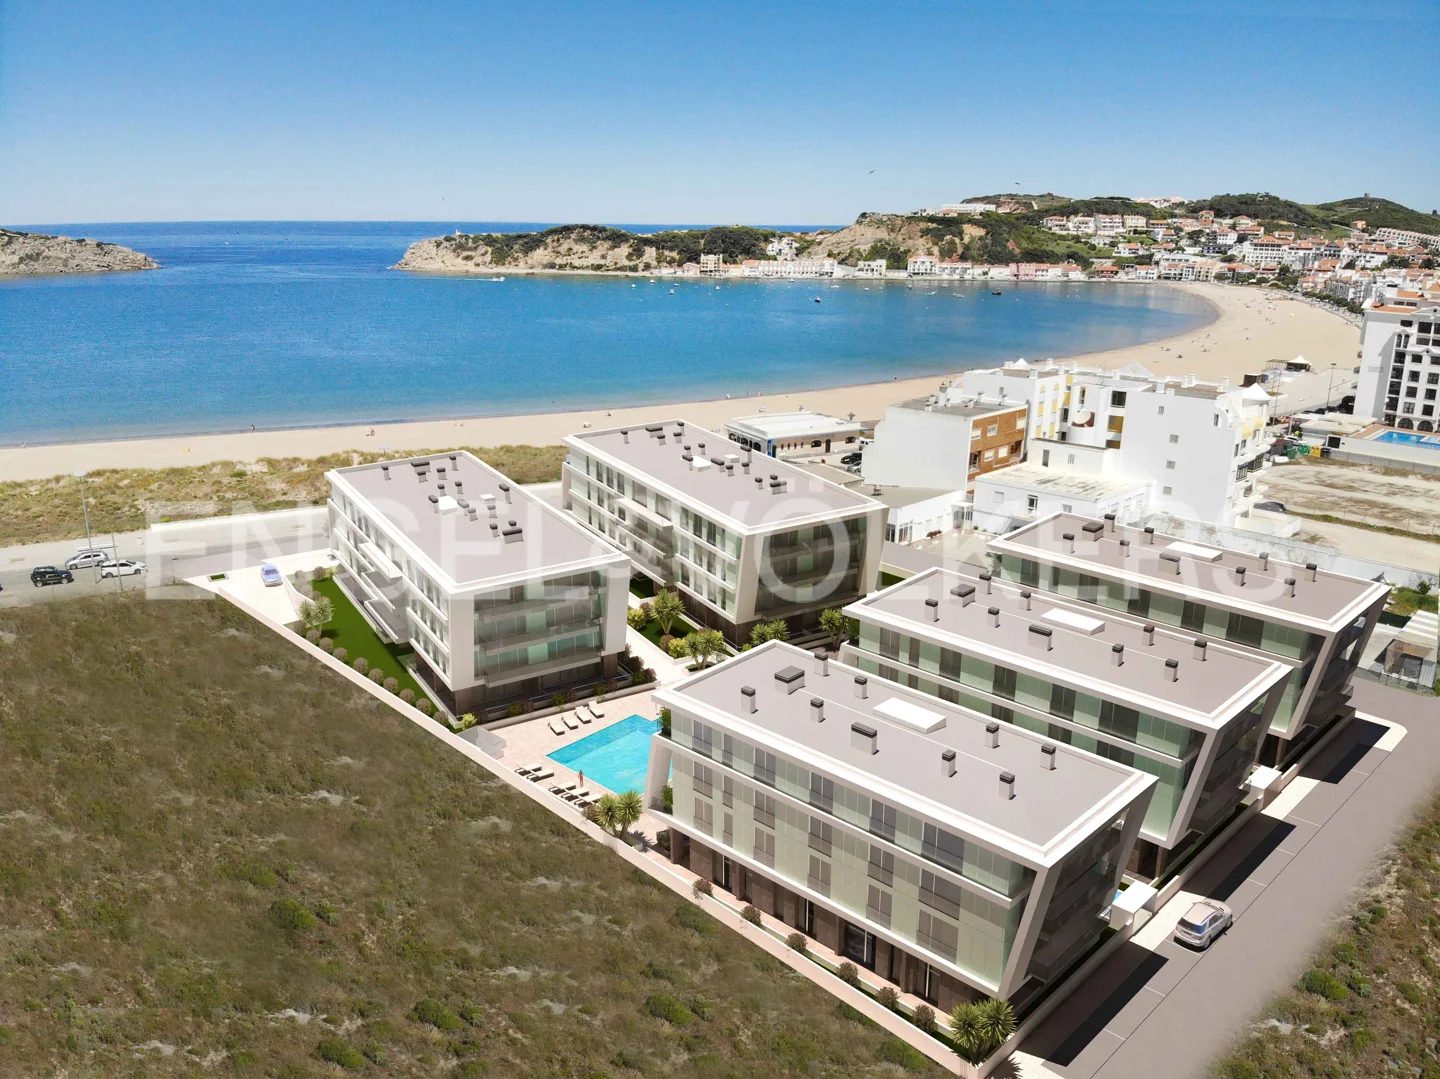 Apartments with views to the bay of S. Martinho do Porto